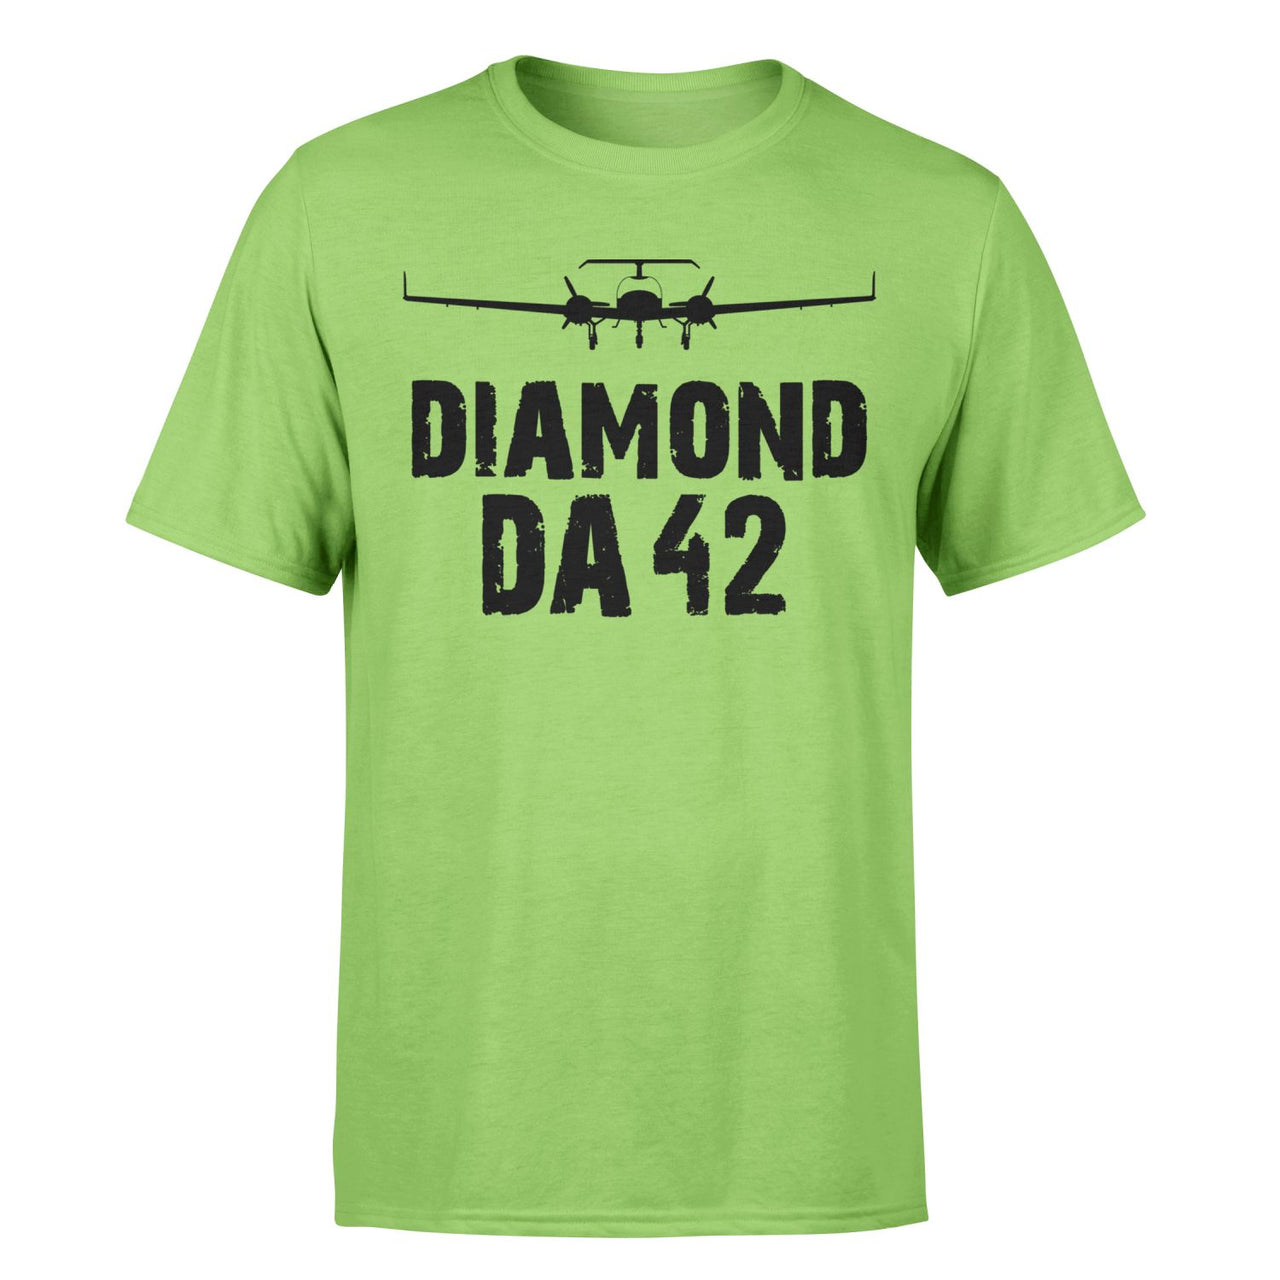 Diamond DA42 & Plane Designed T-Shirts